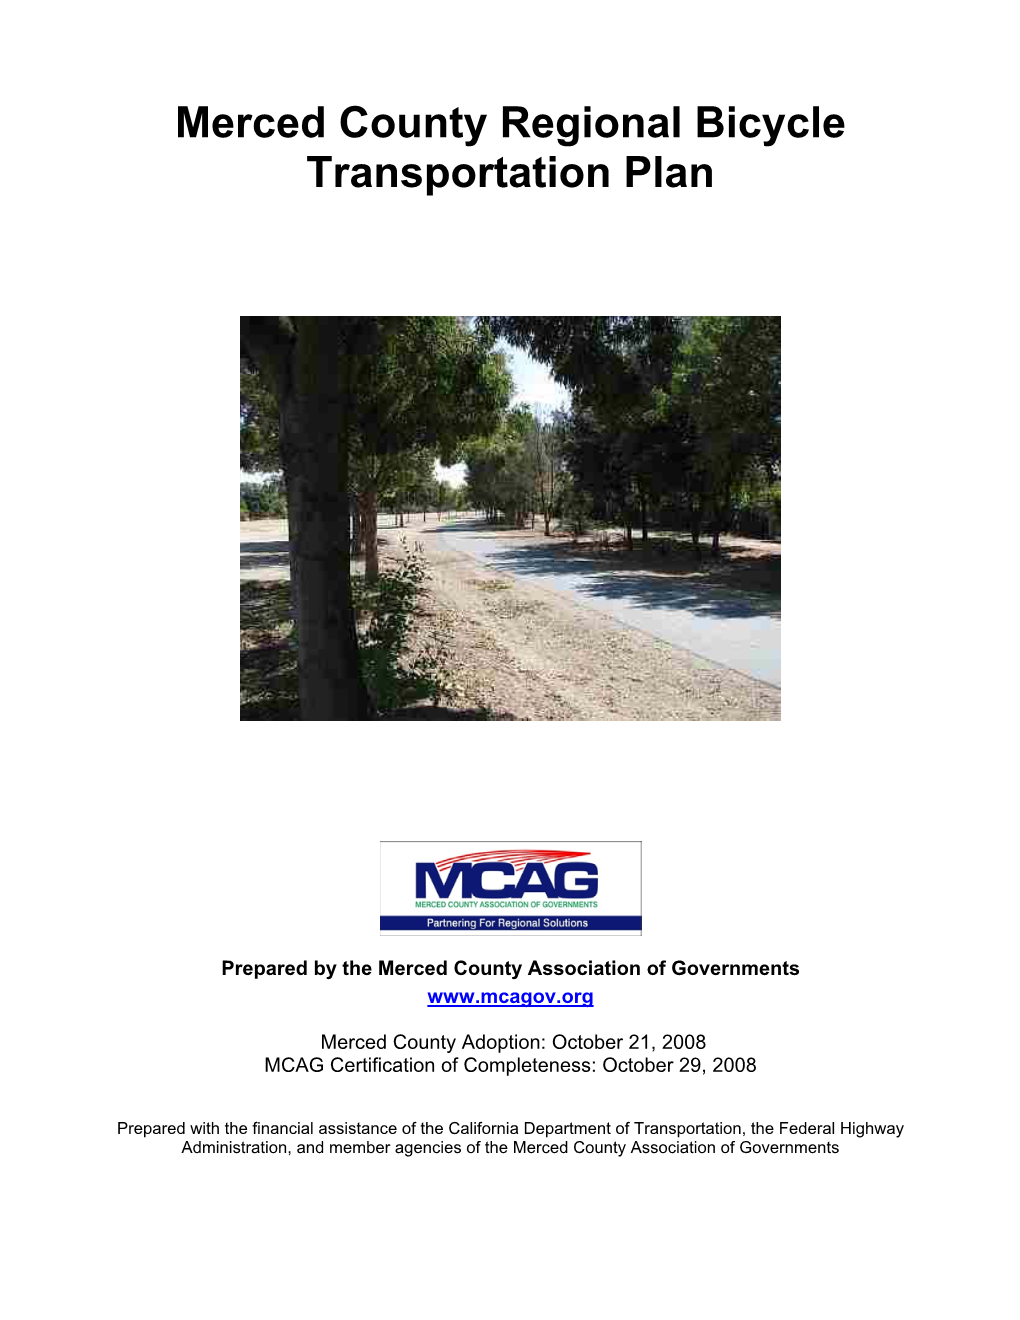 Merced County Regional Bicycle Transportation Plan